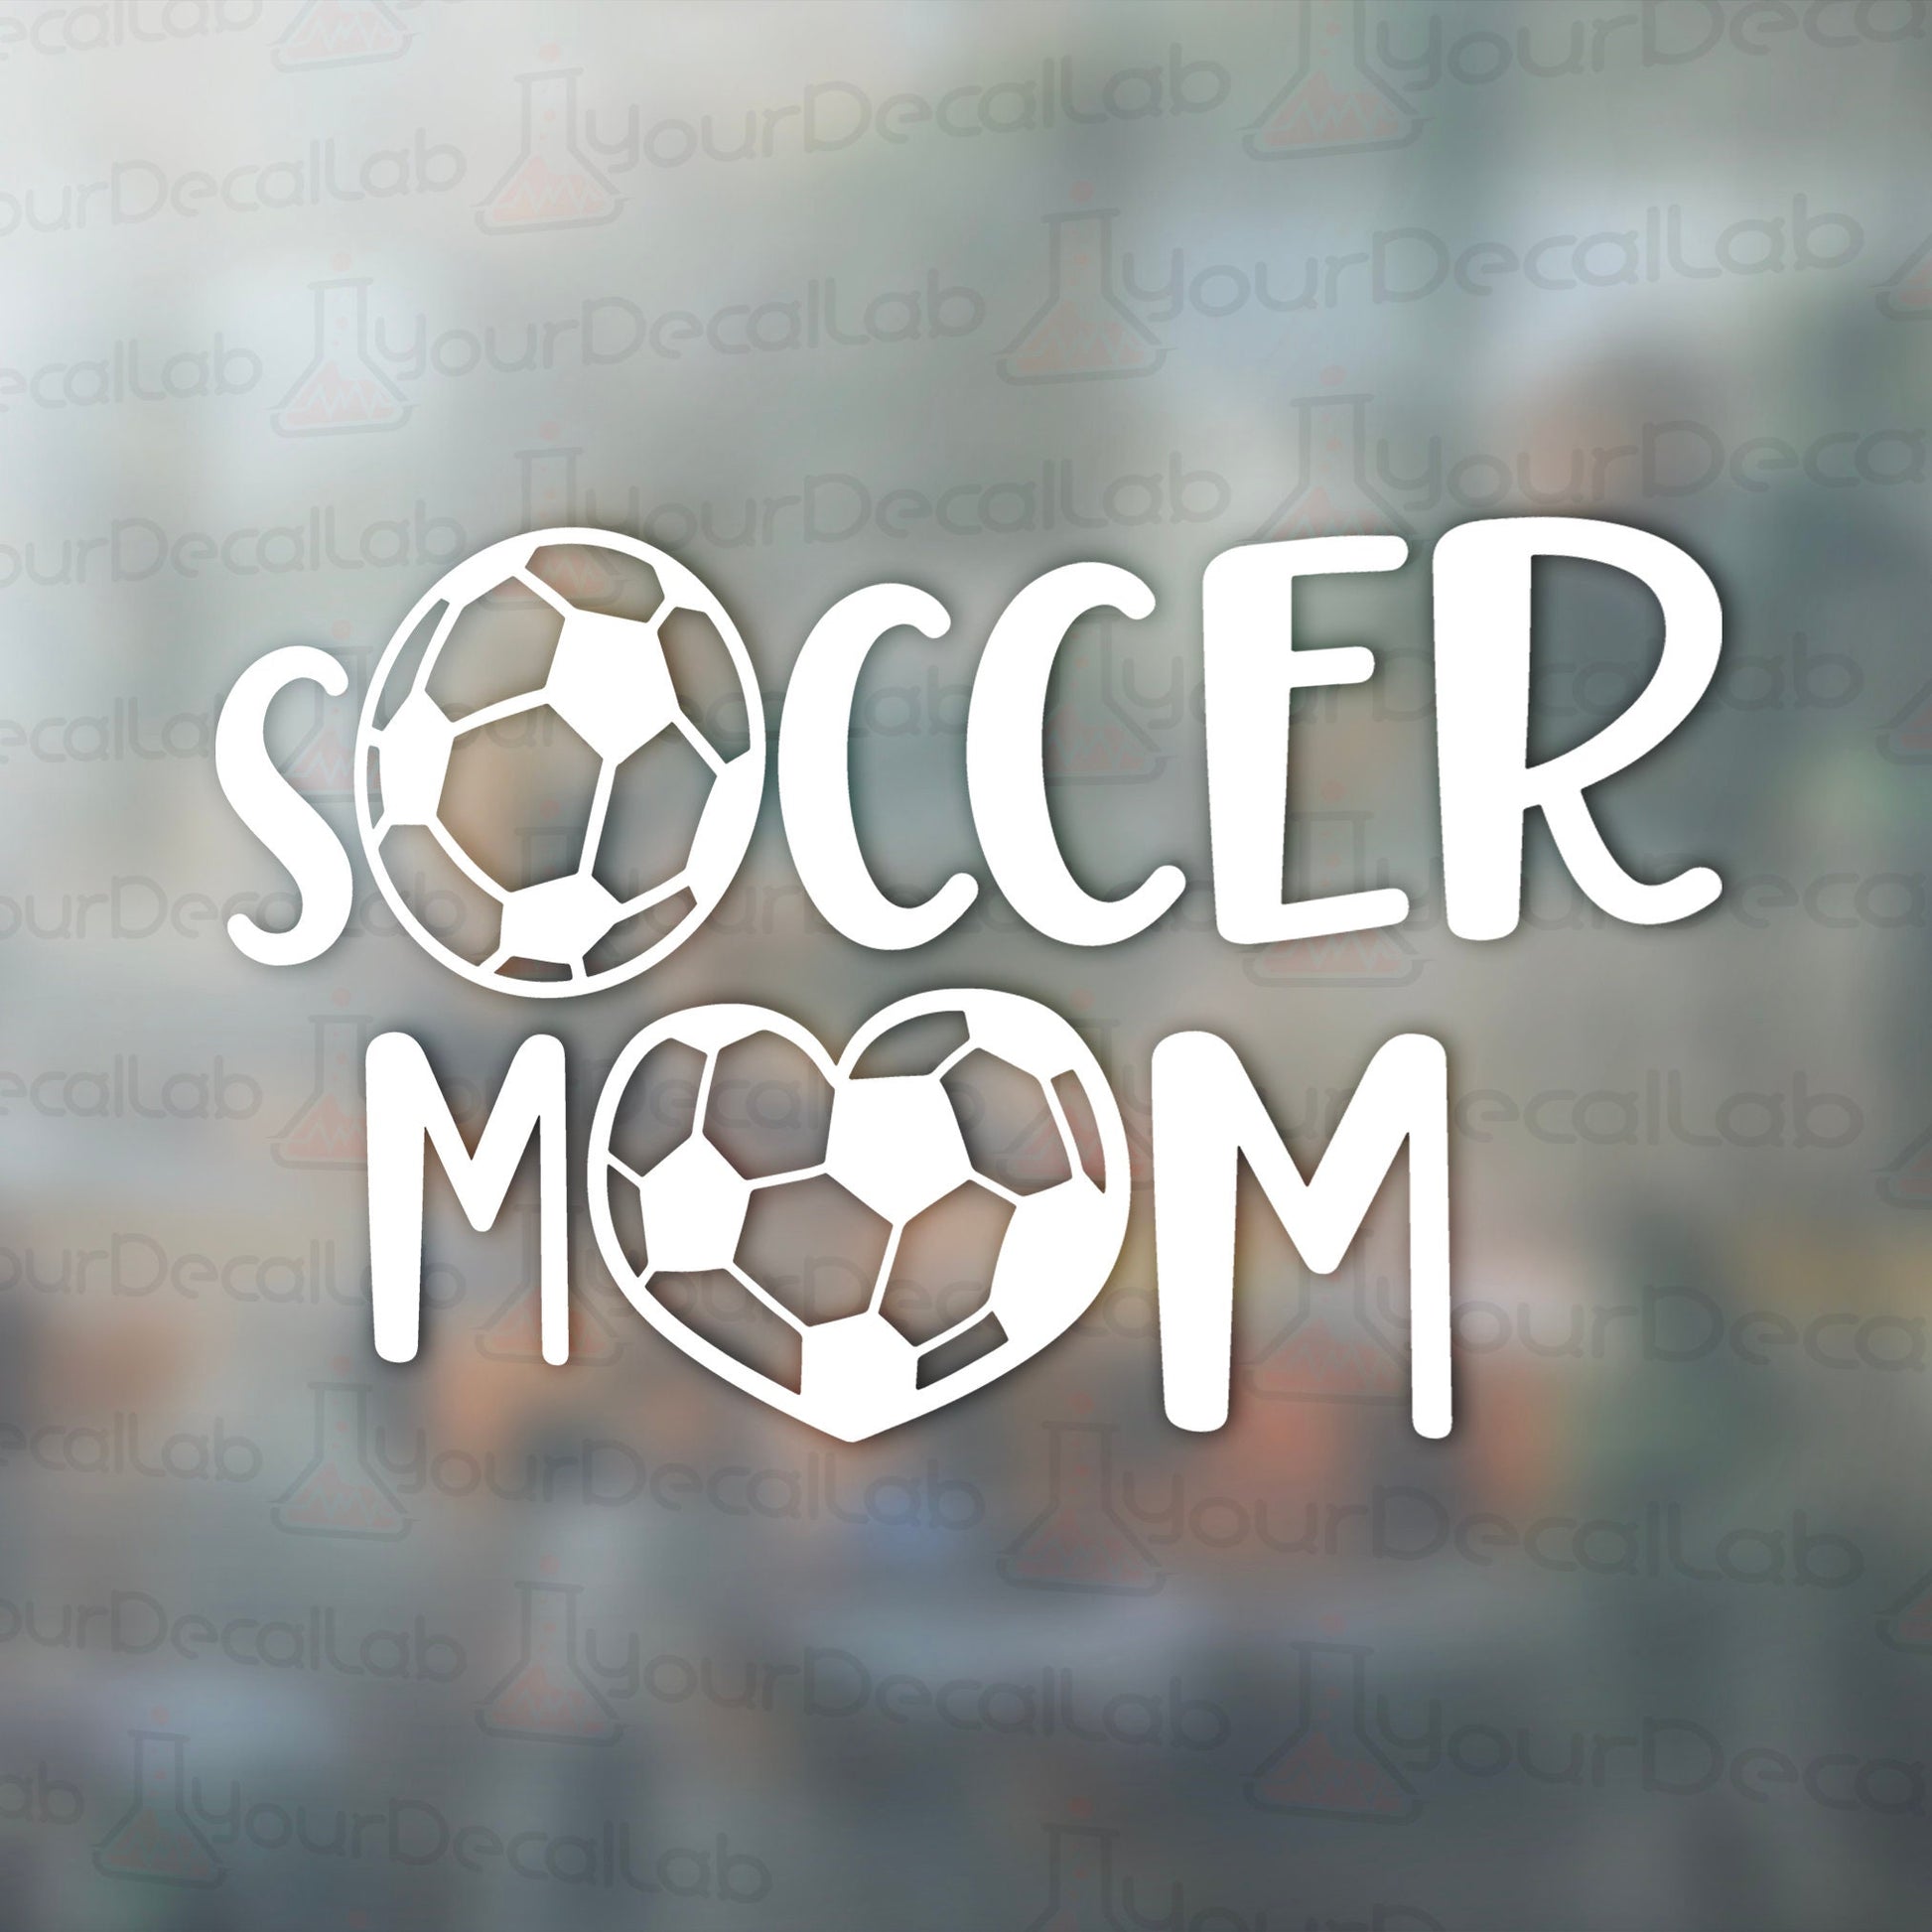 a soccer mom sticker on a window